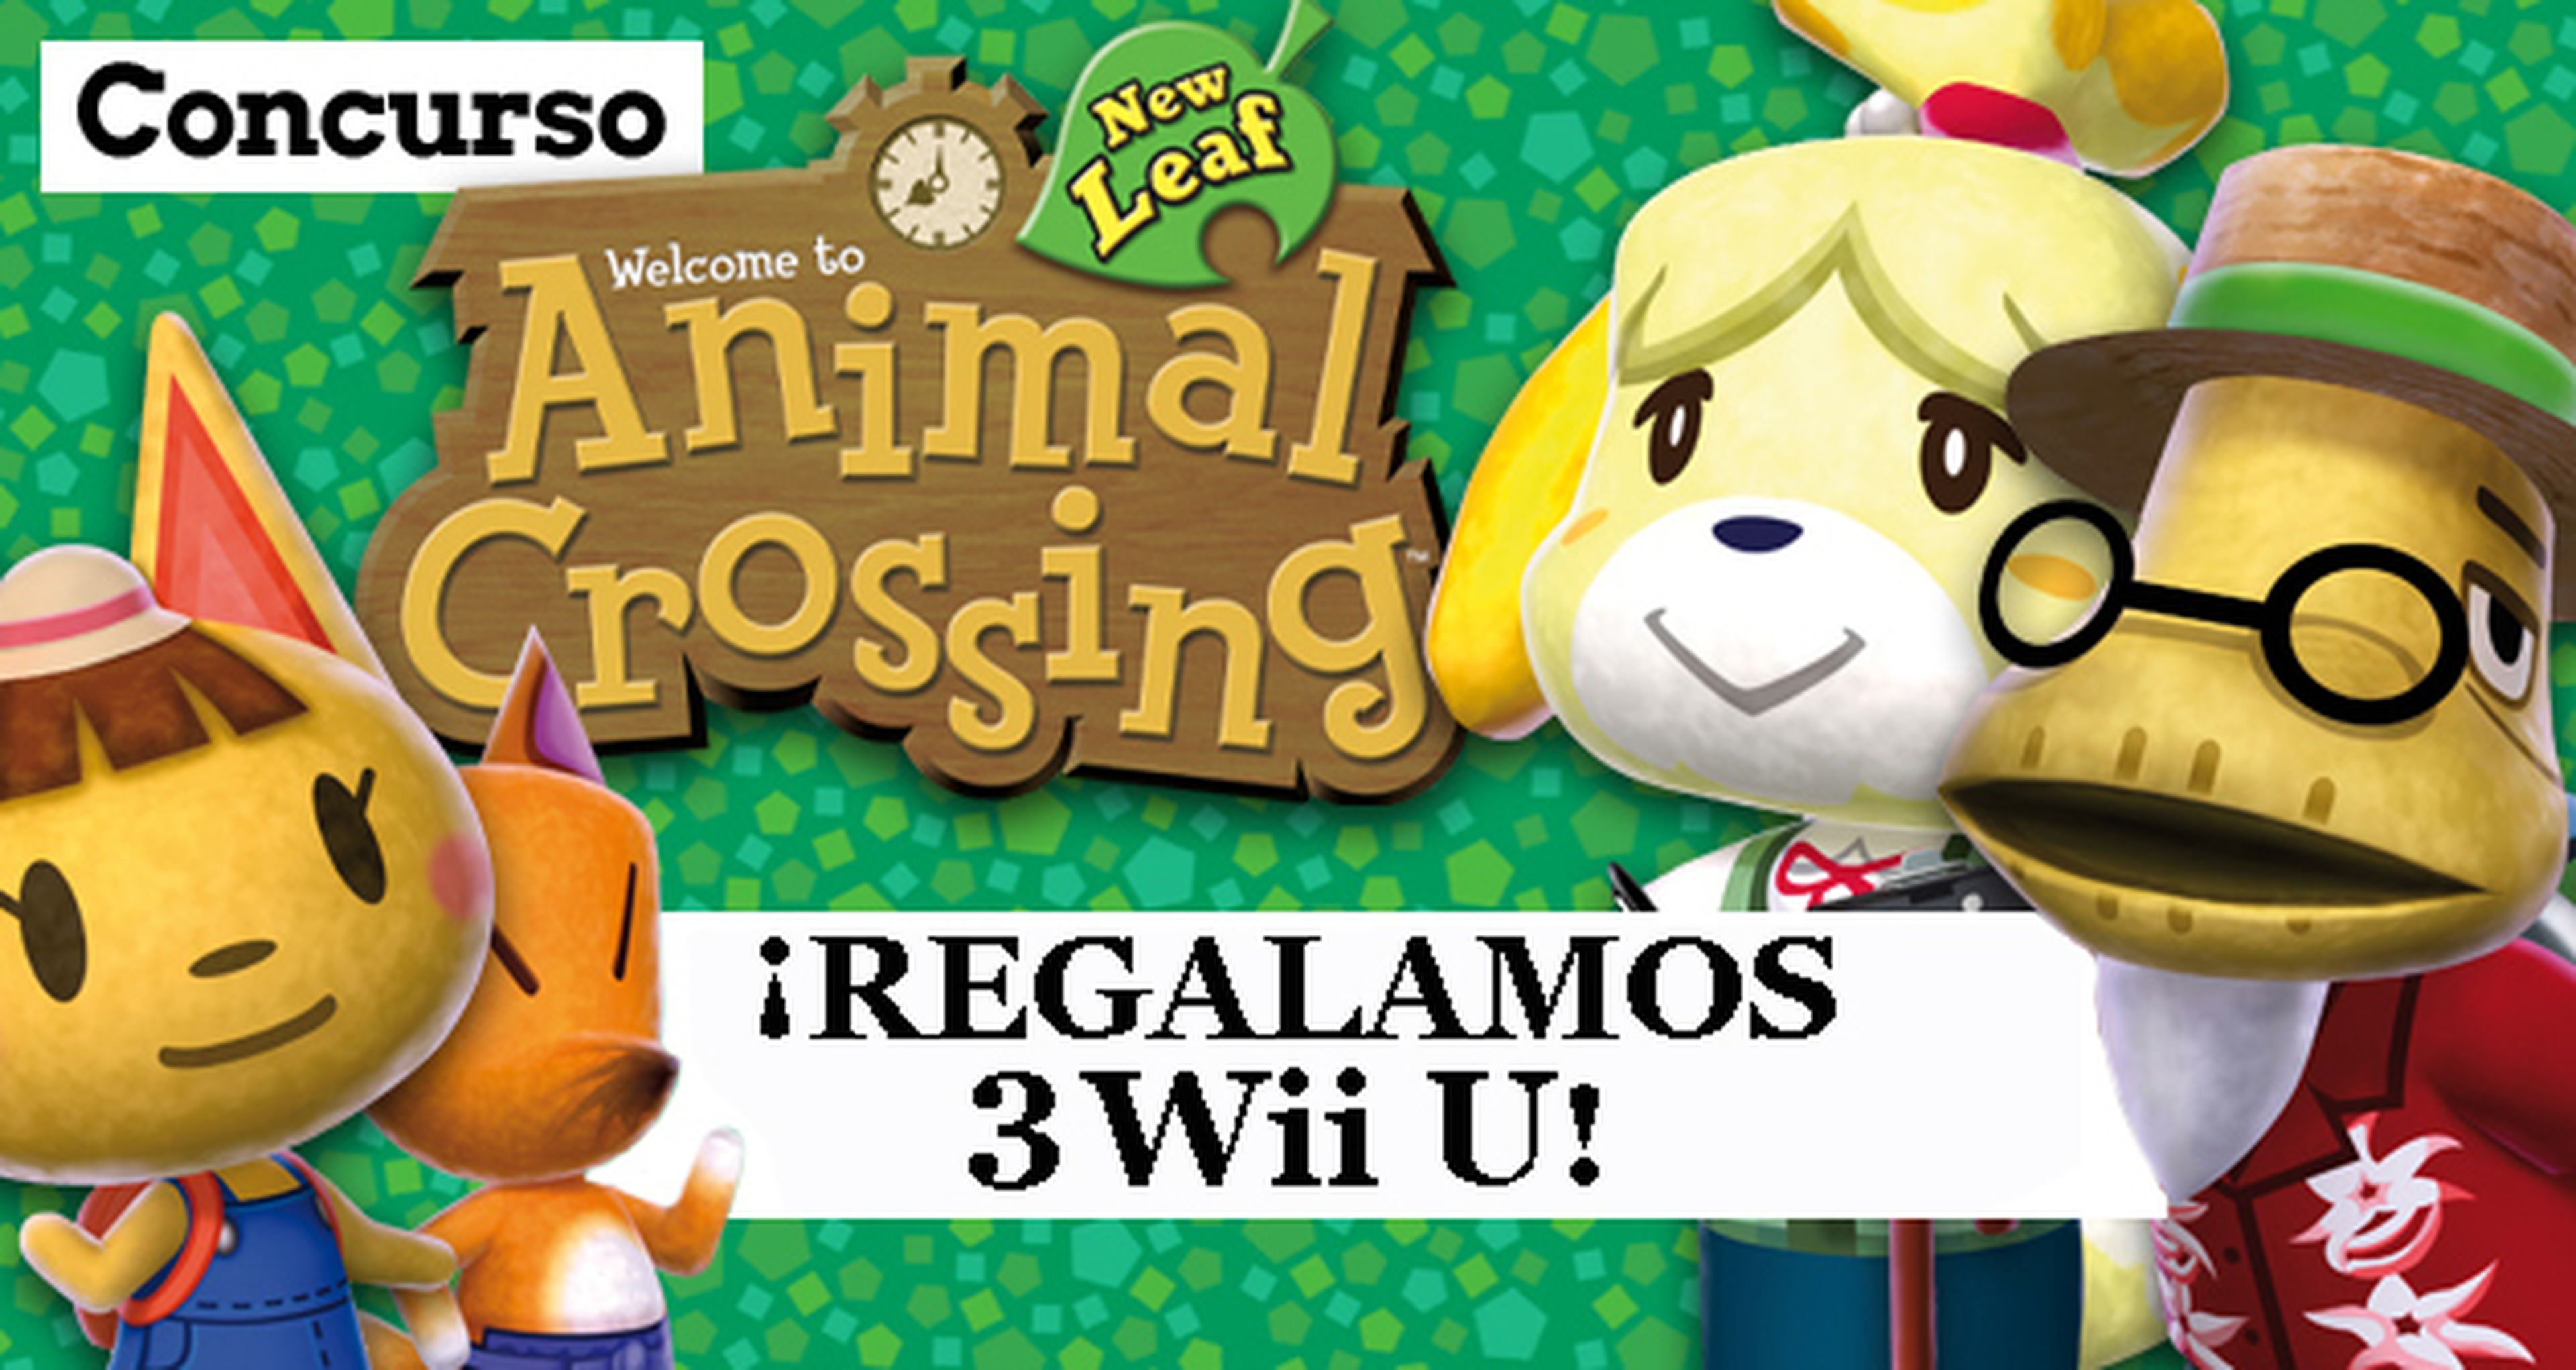 Concurso: Animal Crossing New Leaf